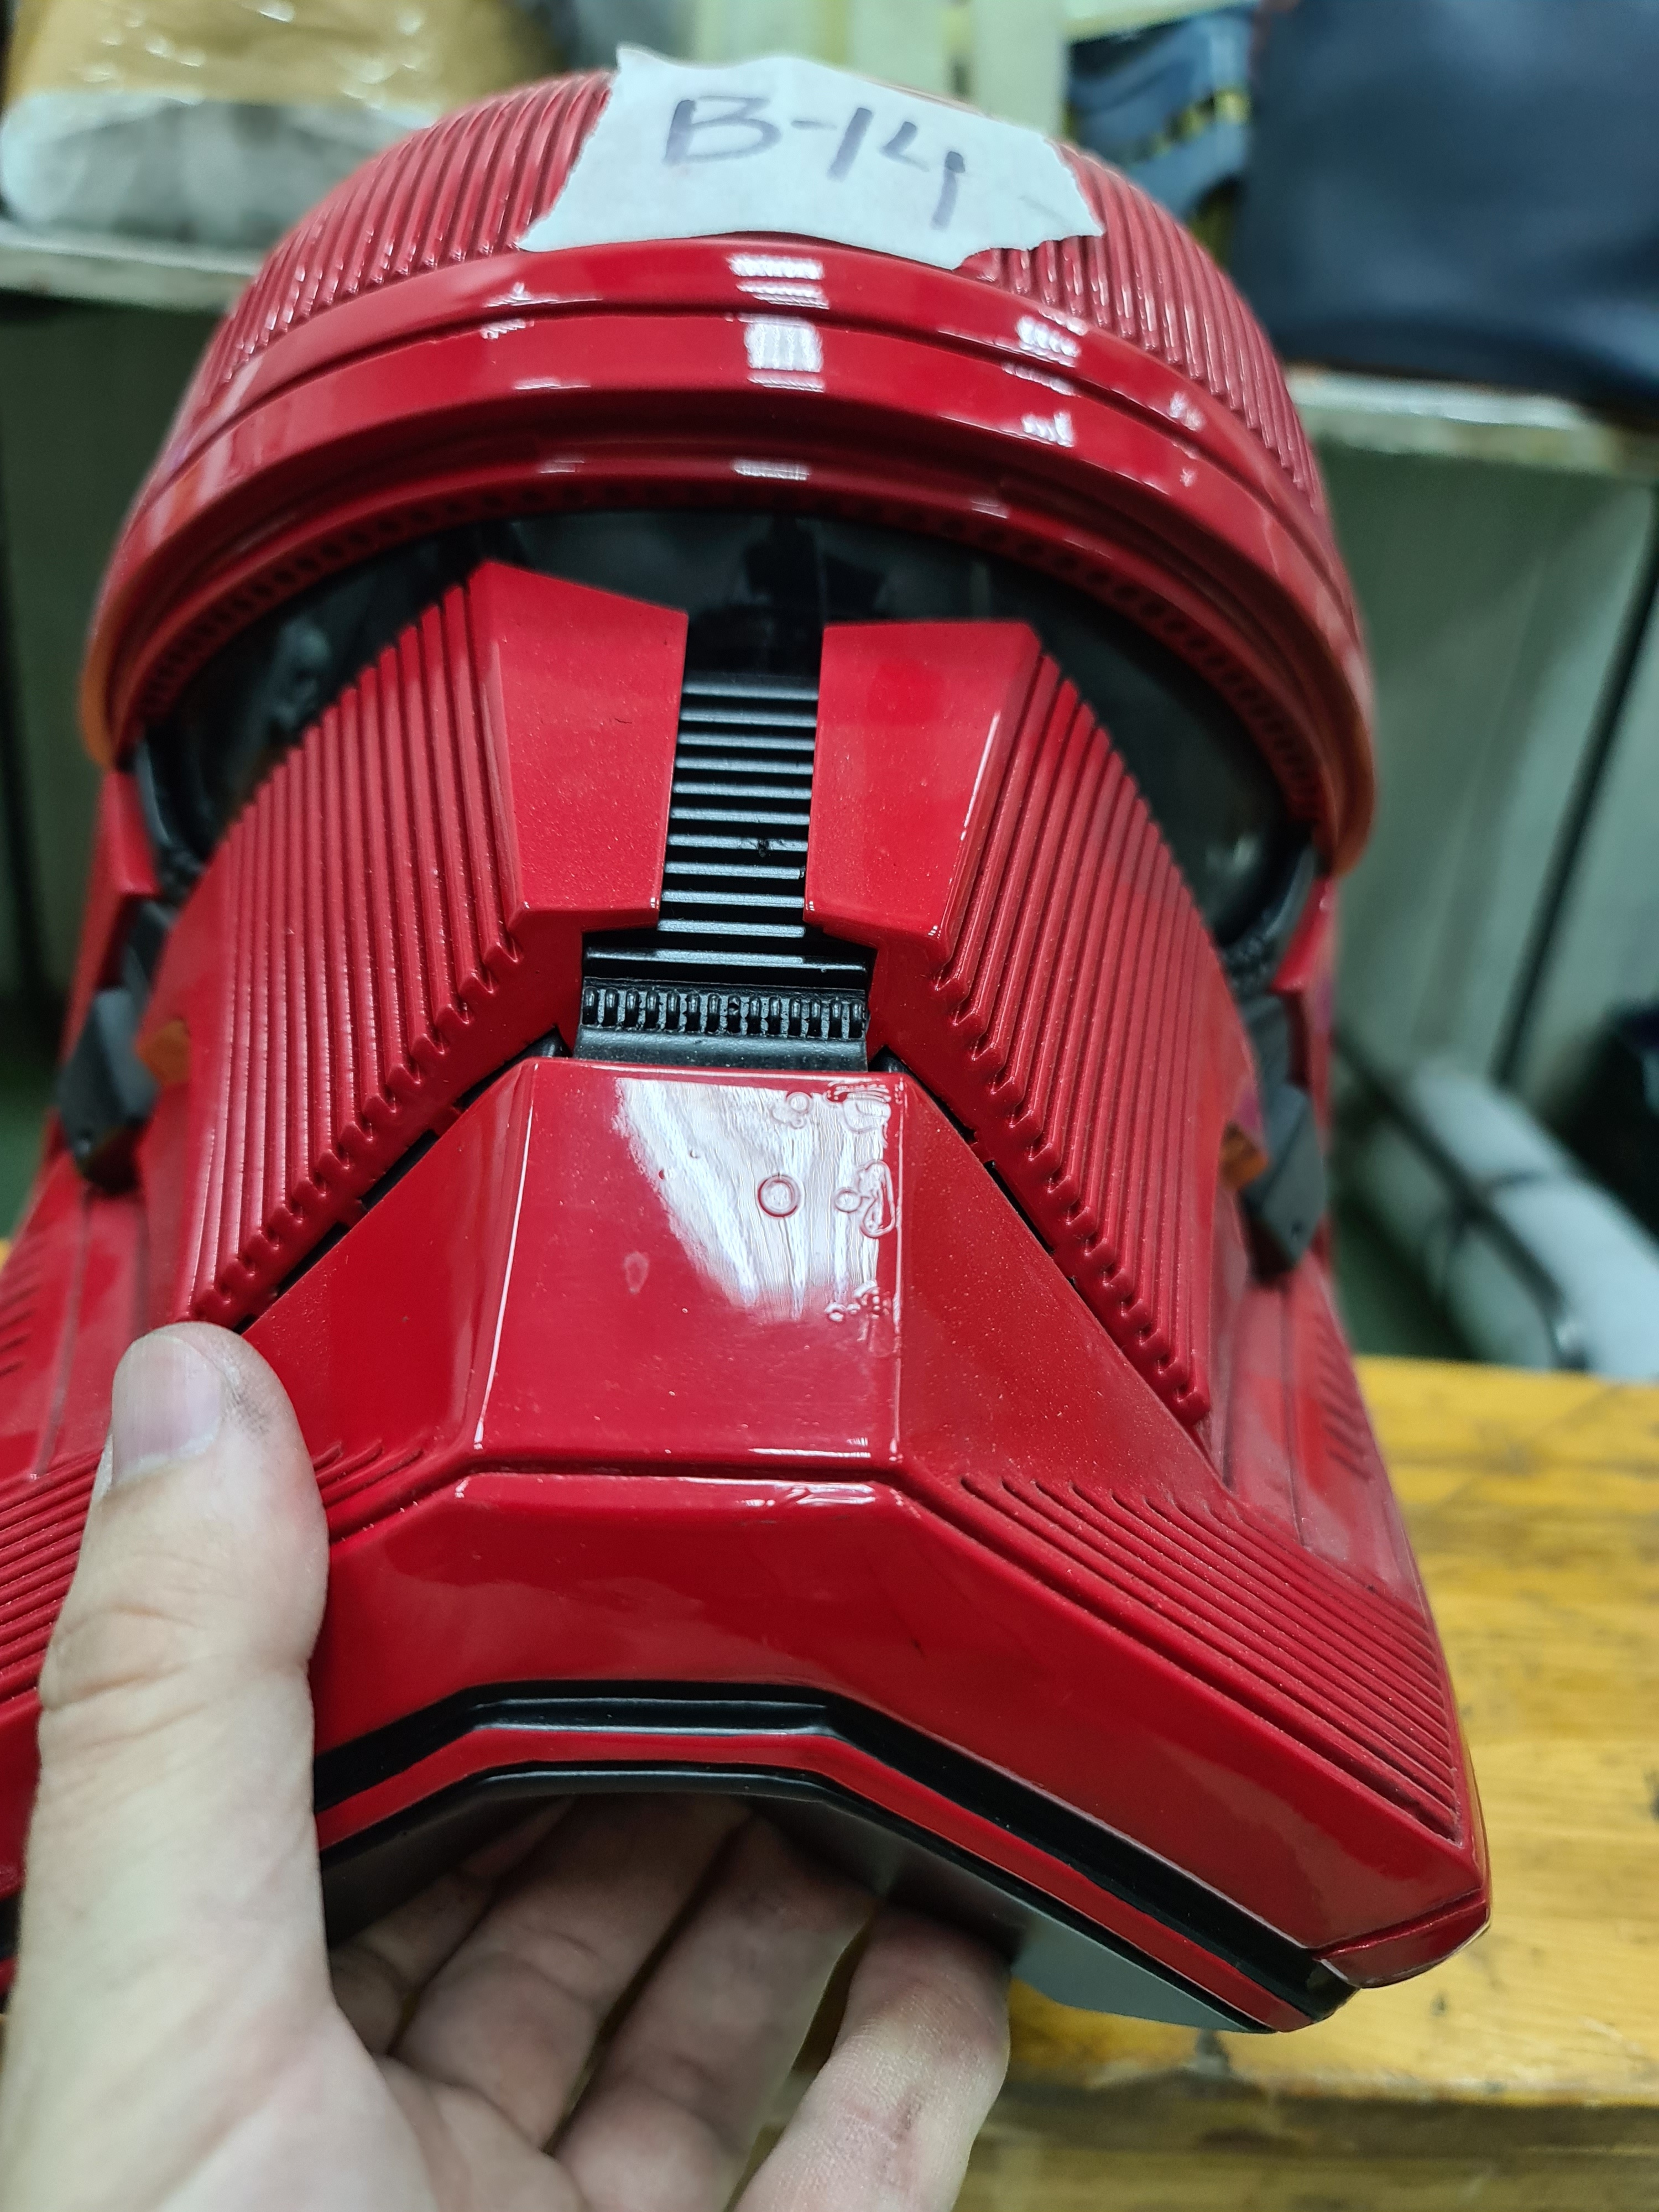 Grade "B" helmet - Sith Trooper #14